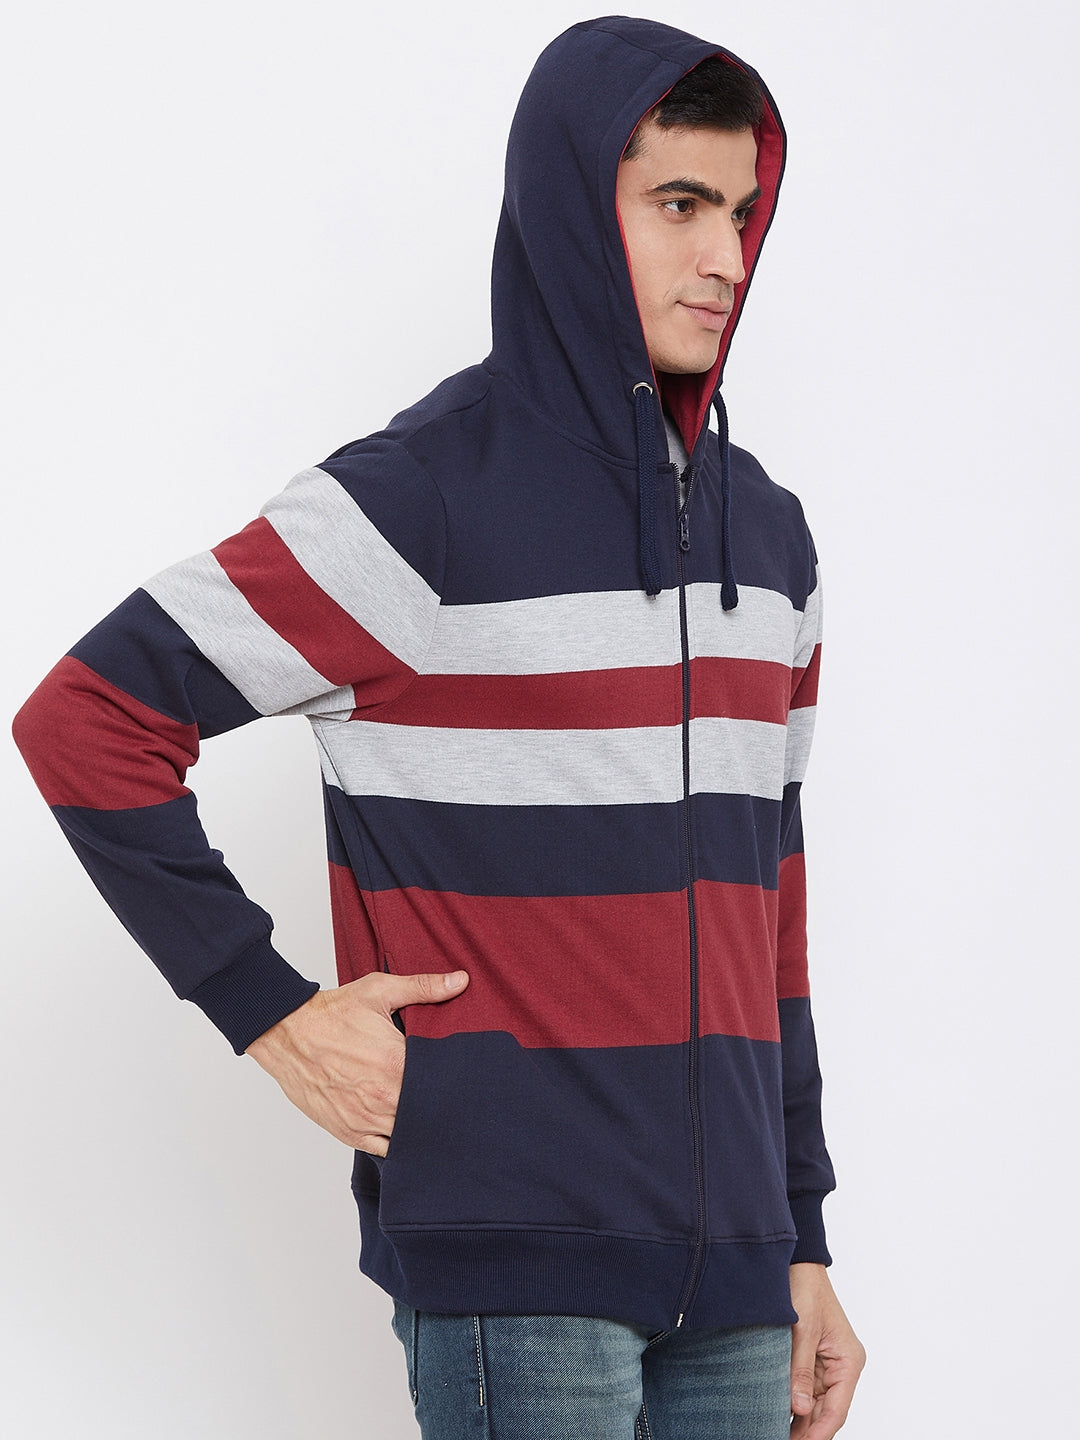 Austin Wood Men's Multi Full Sleeves Striper Hooded Sweatshirt